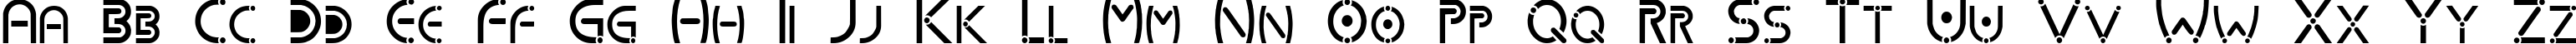 Пример написания английского алфавита шрифтом Kharnorric